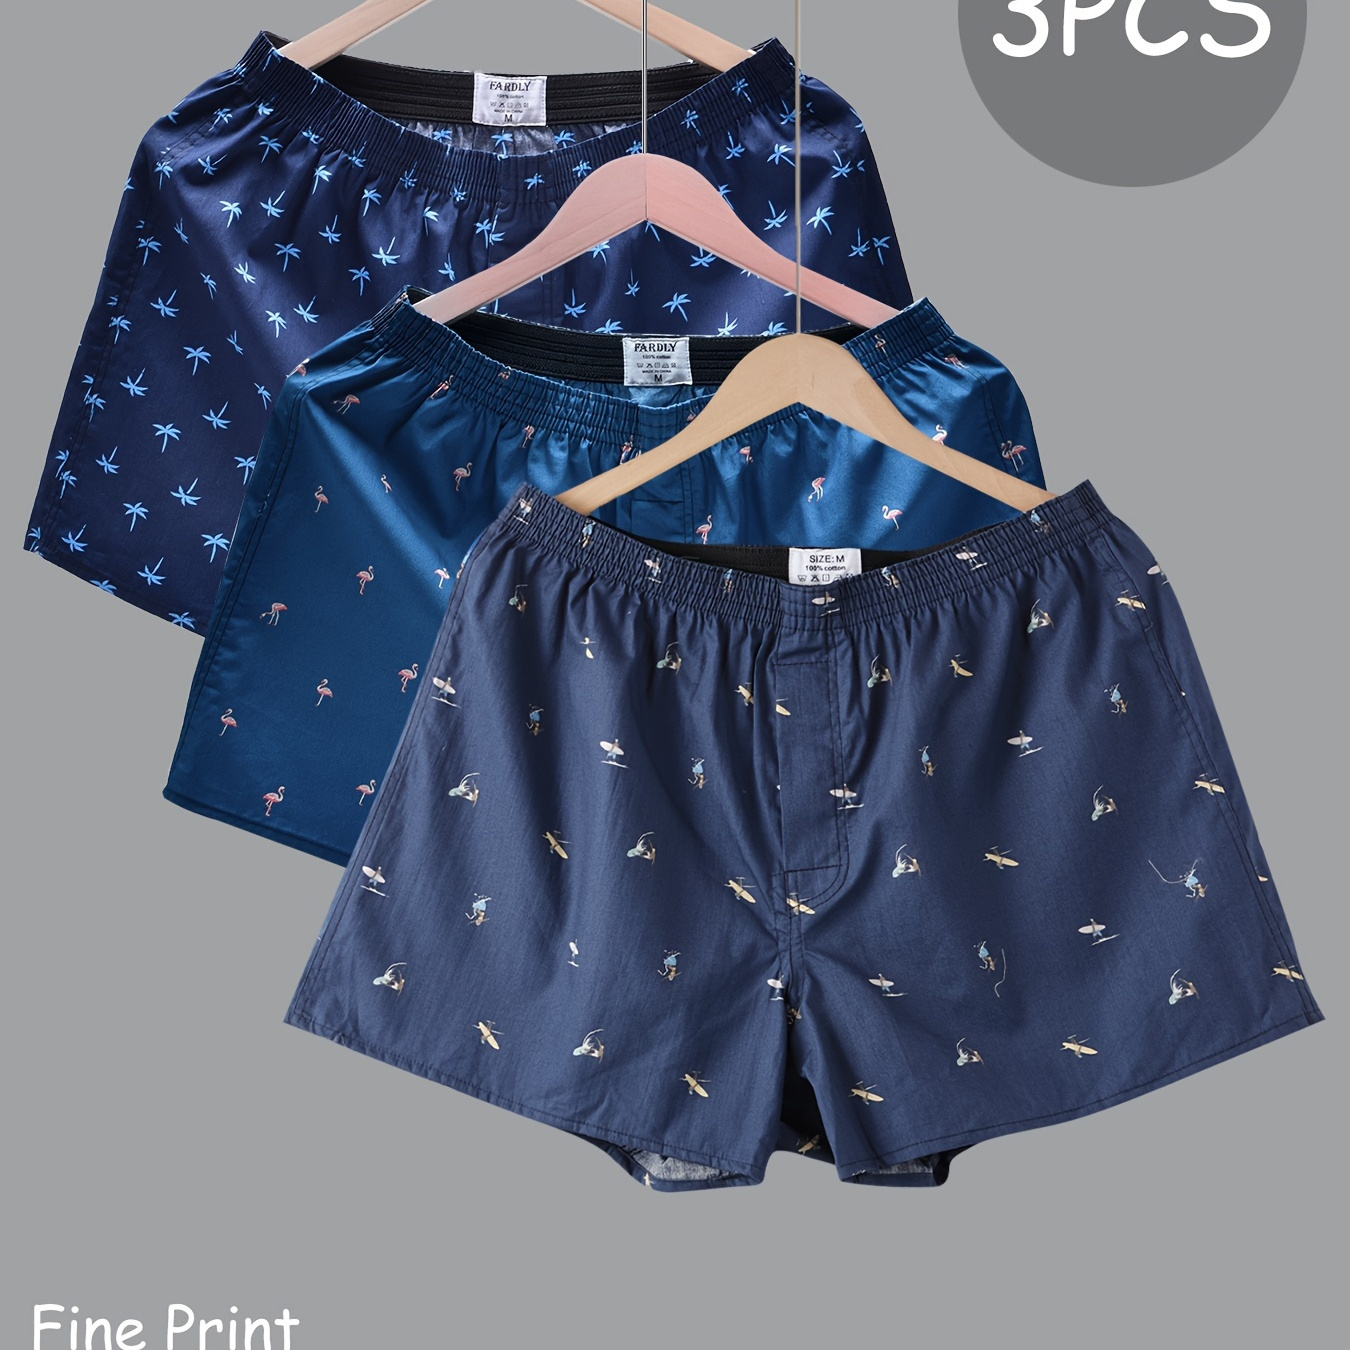 

3pcs Men's 100% Cotton Arrow Shorts Printed Loose Breathable Boxers Underwear Briefs, Multicolor Set